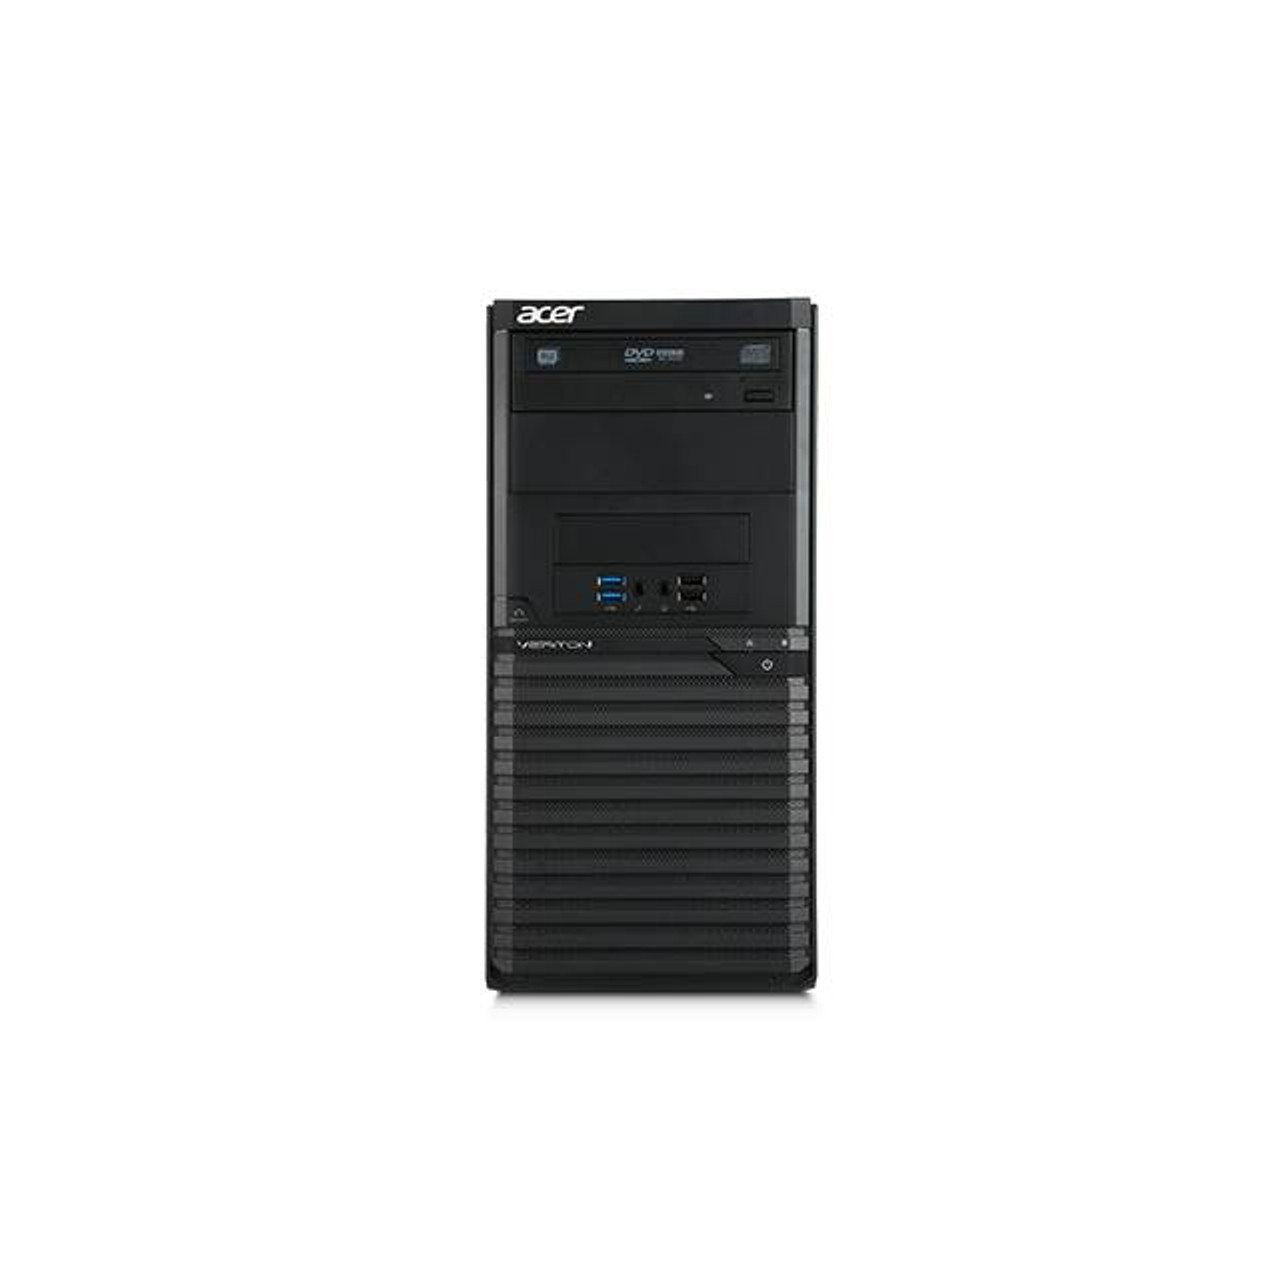 Acer Veriton 2 VM2632G-G3250X Intel Pentium G3250 3.2GHz/ 4GB DDR3/ 500GB HDD/ DVD±RW/ Windows 7 Professional or Windows 8.1 Pro Desktop PC (Black)